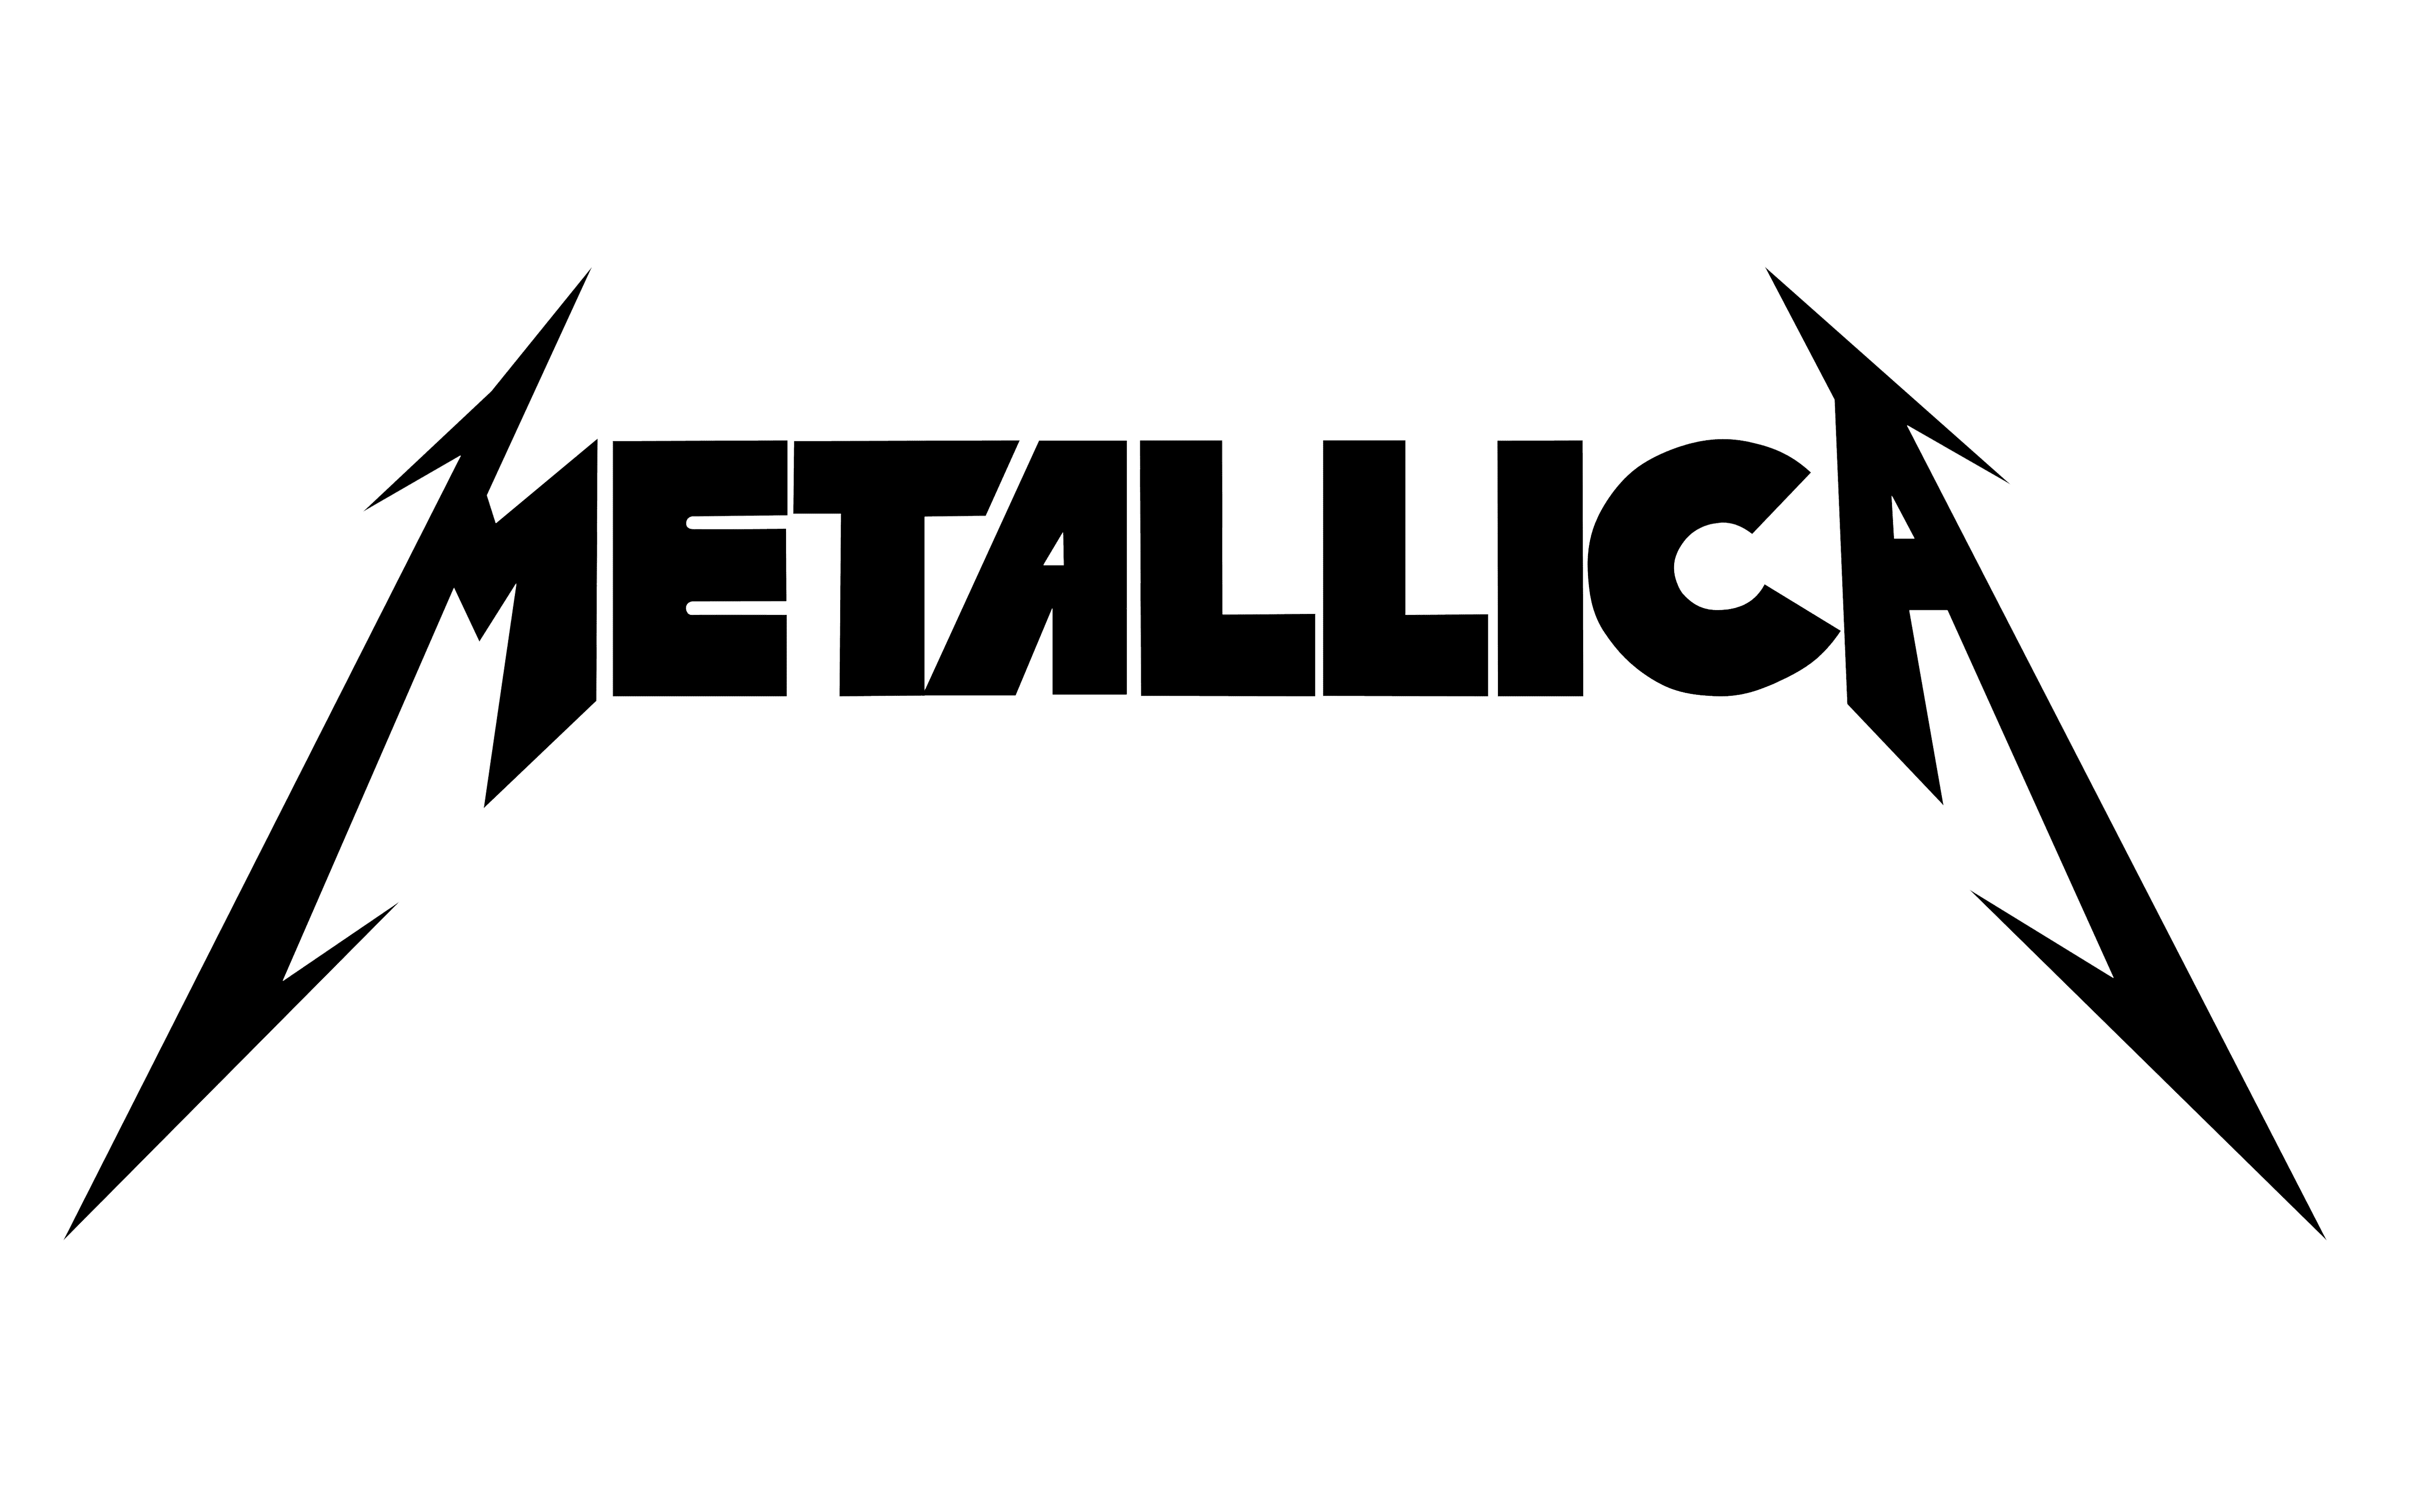 Metallica Logo, Metallica Symbol Meaning, History and Evolution